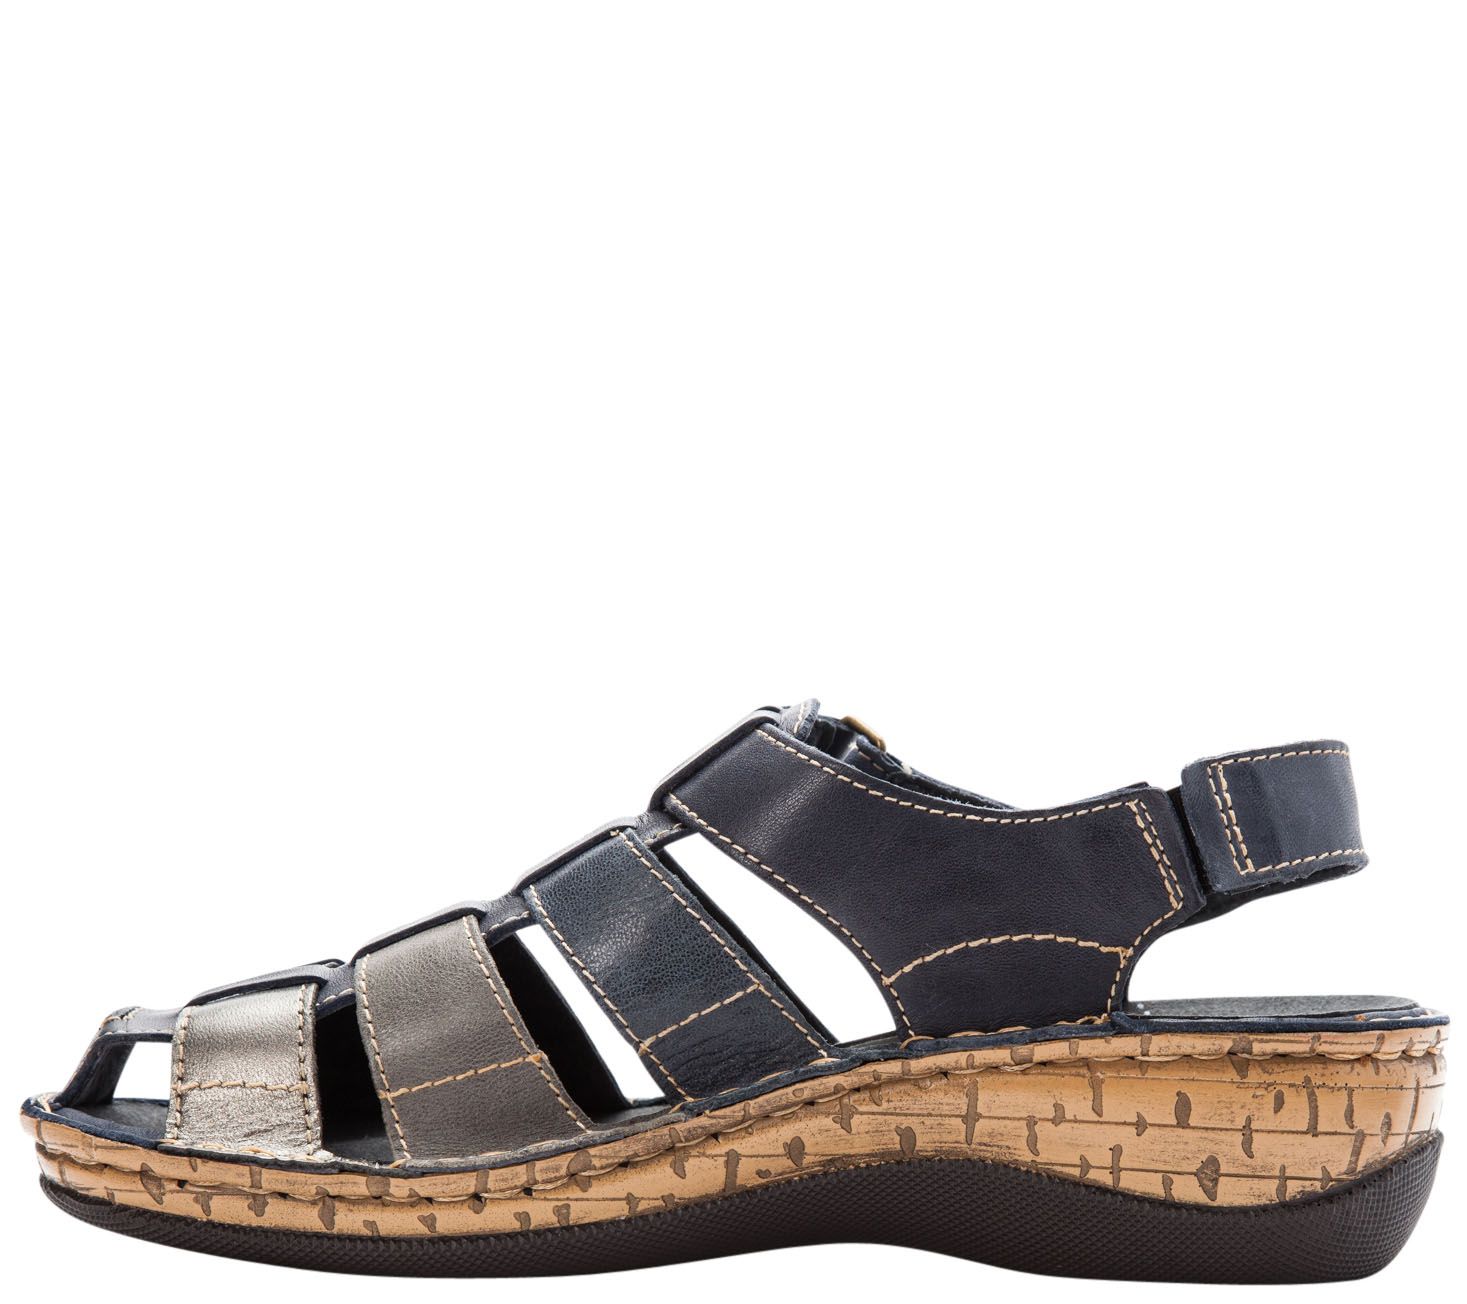 Propet Leather Sandals - Jubilee - QVC.com